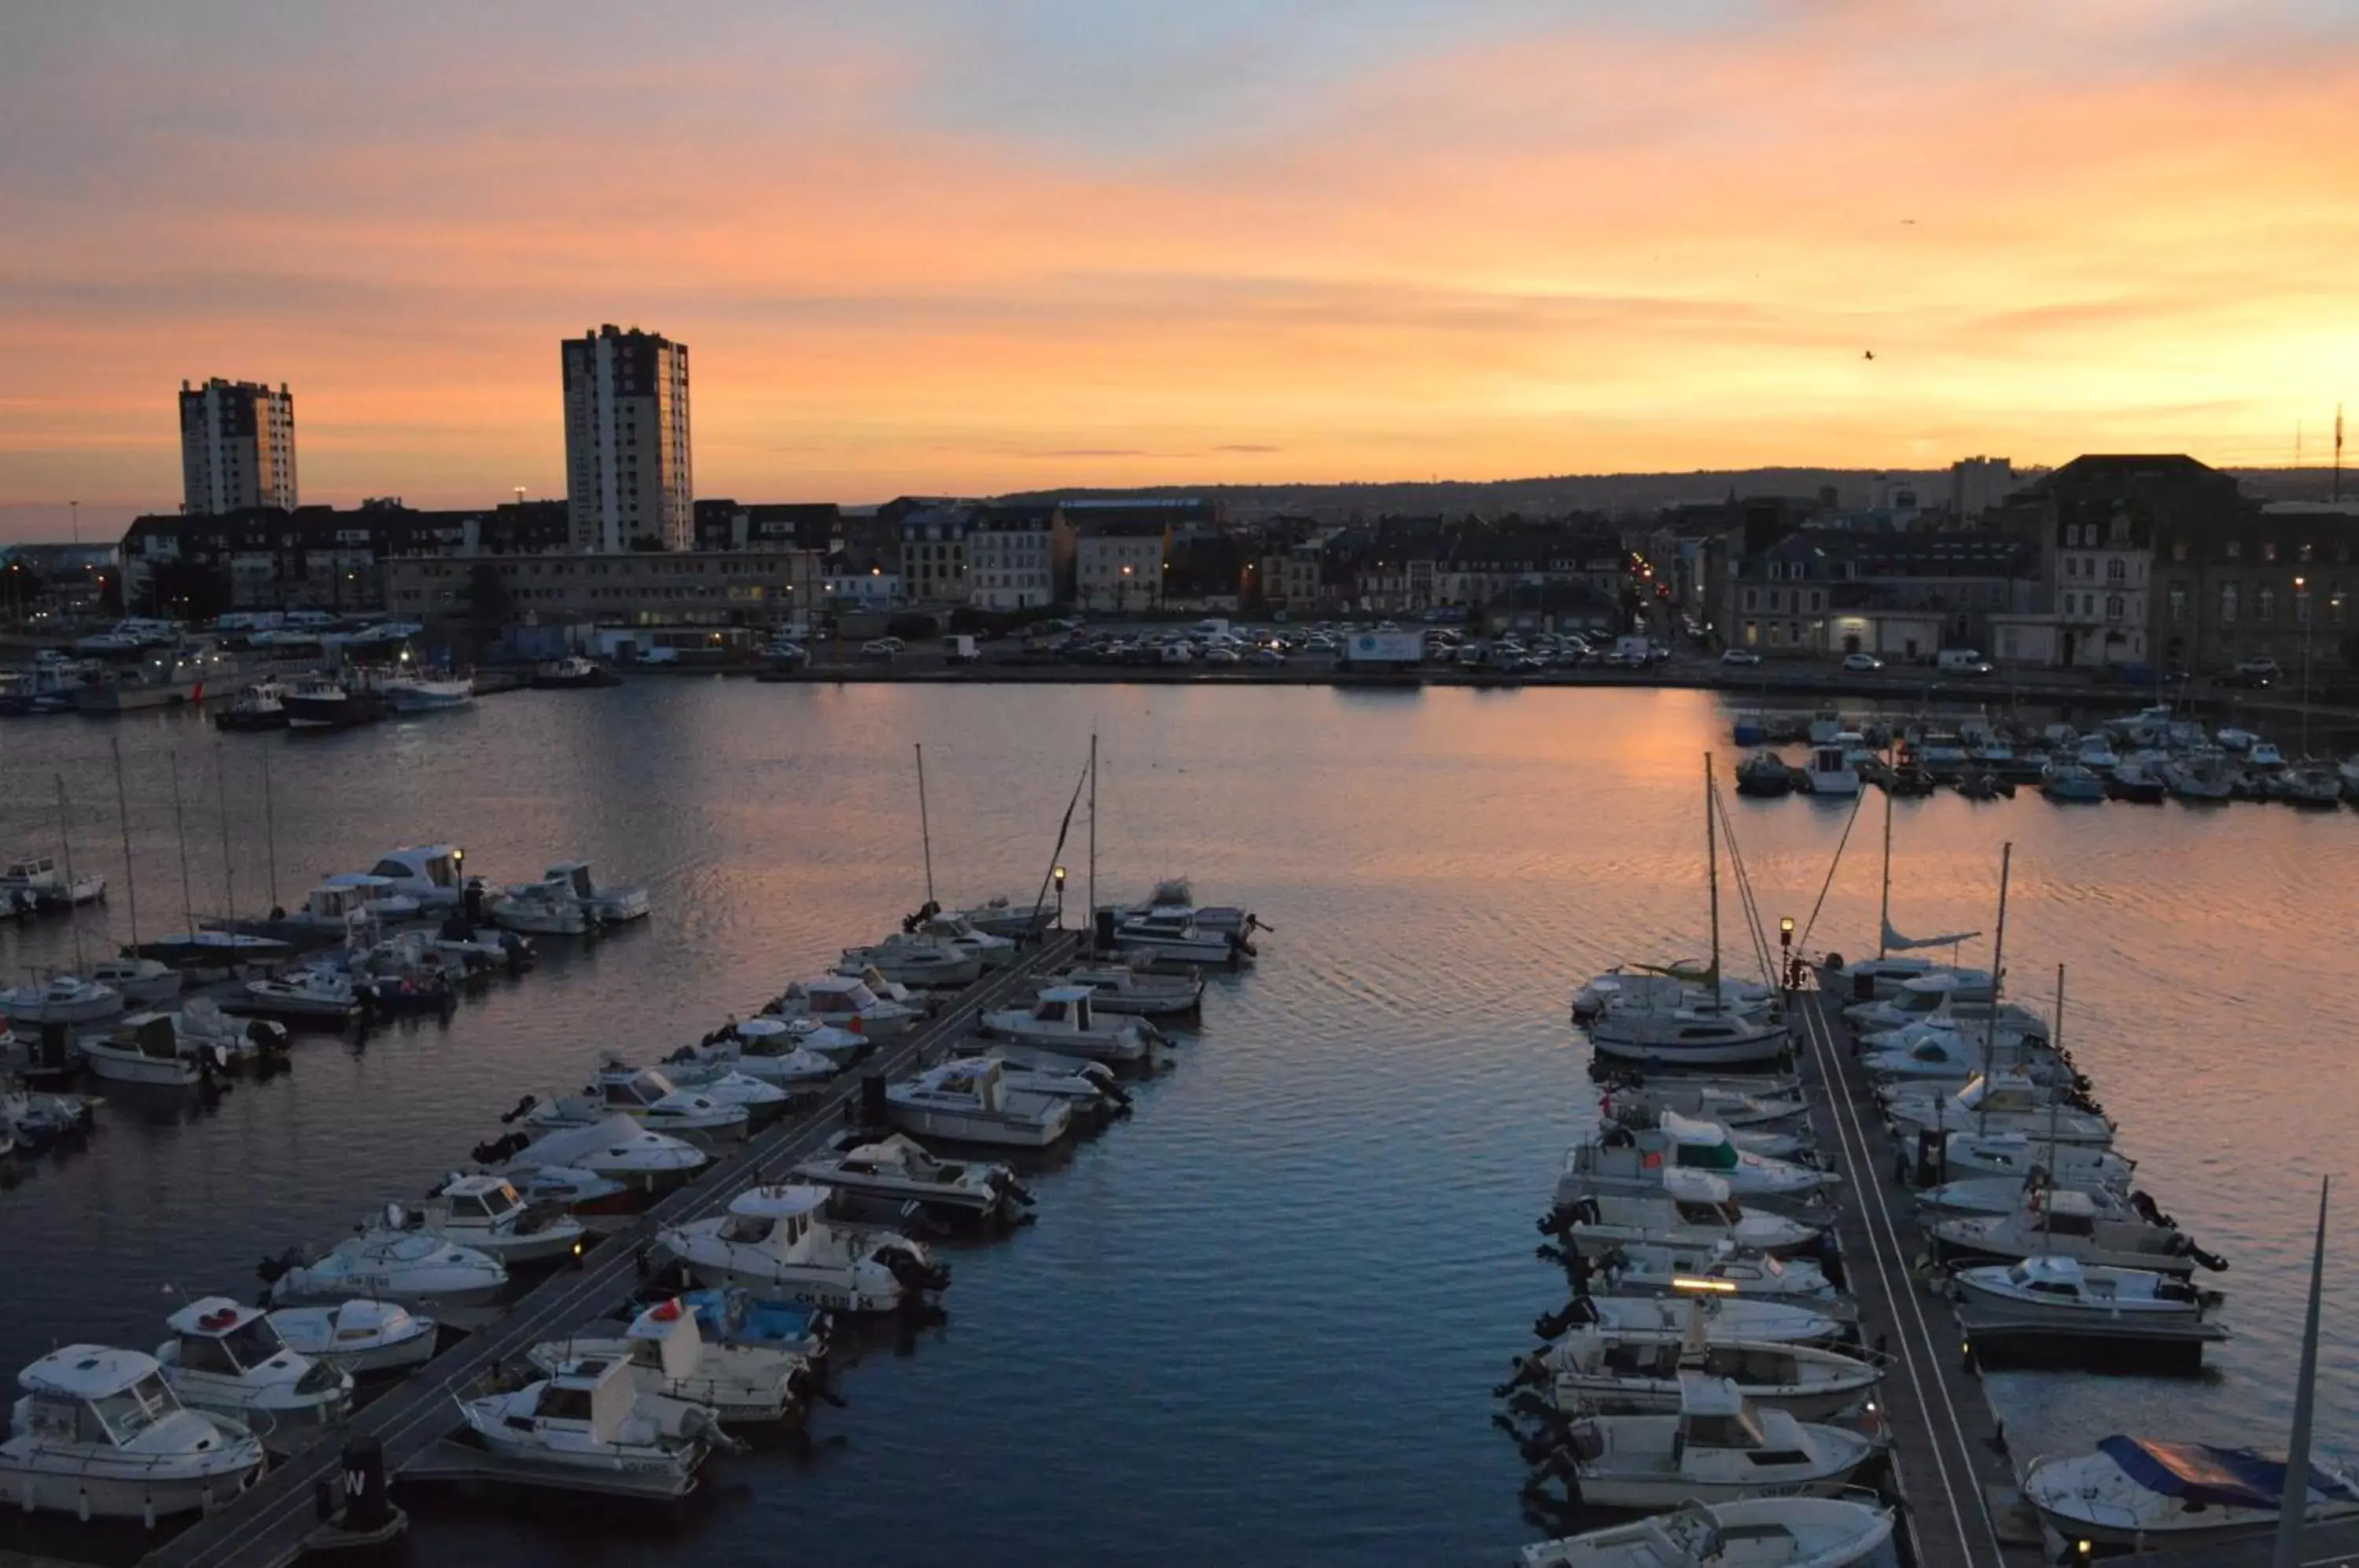 Natural landscape, Sunrise/Sunset in Ambassadeur Hotel - Cherbourg Port de Plaisance